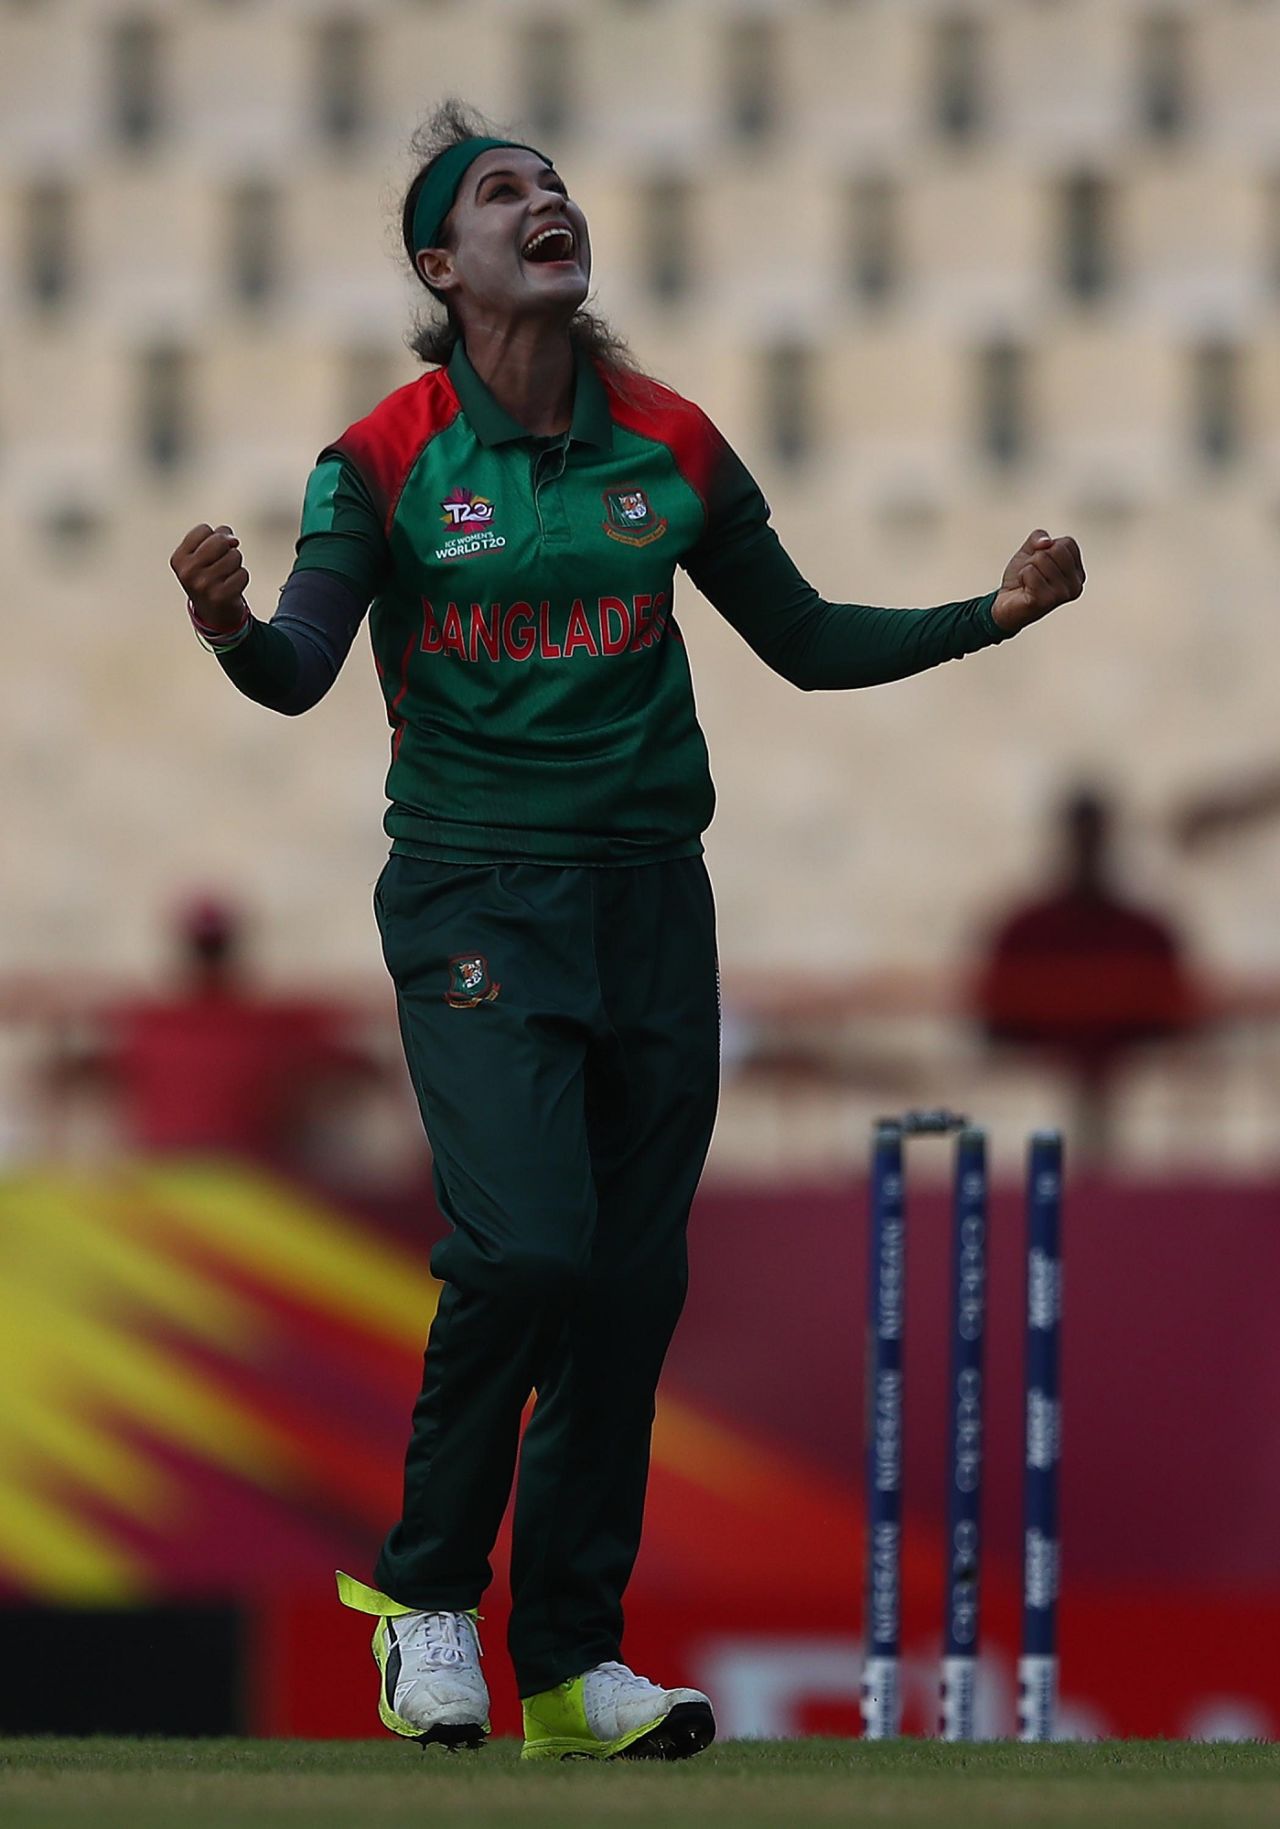 Jahanara Alam celebrates a wicket, Bangladesh v Sri Lanka, Women's World T20, Group A, St Lucia, November 14, 2018